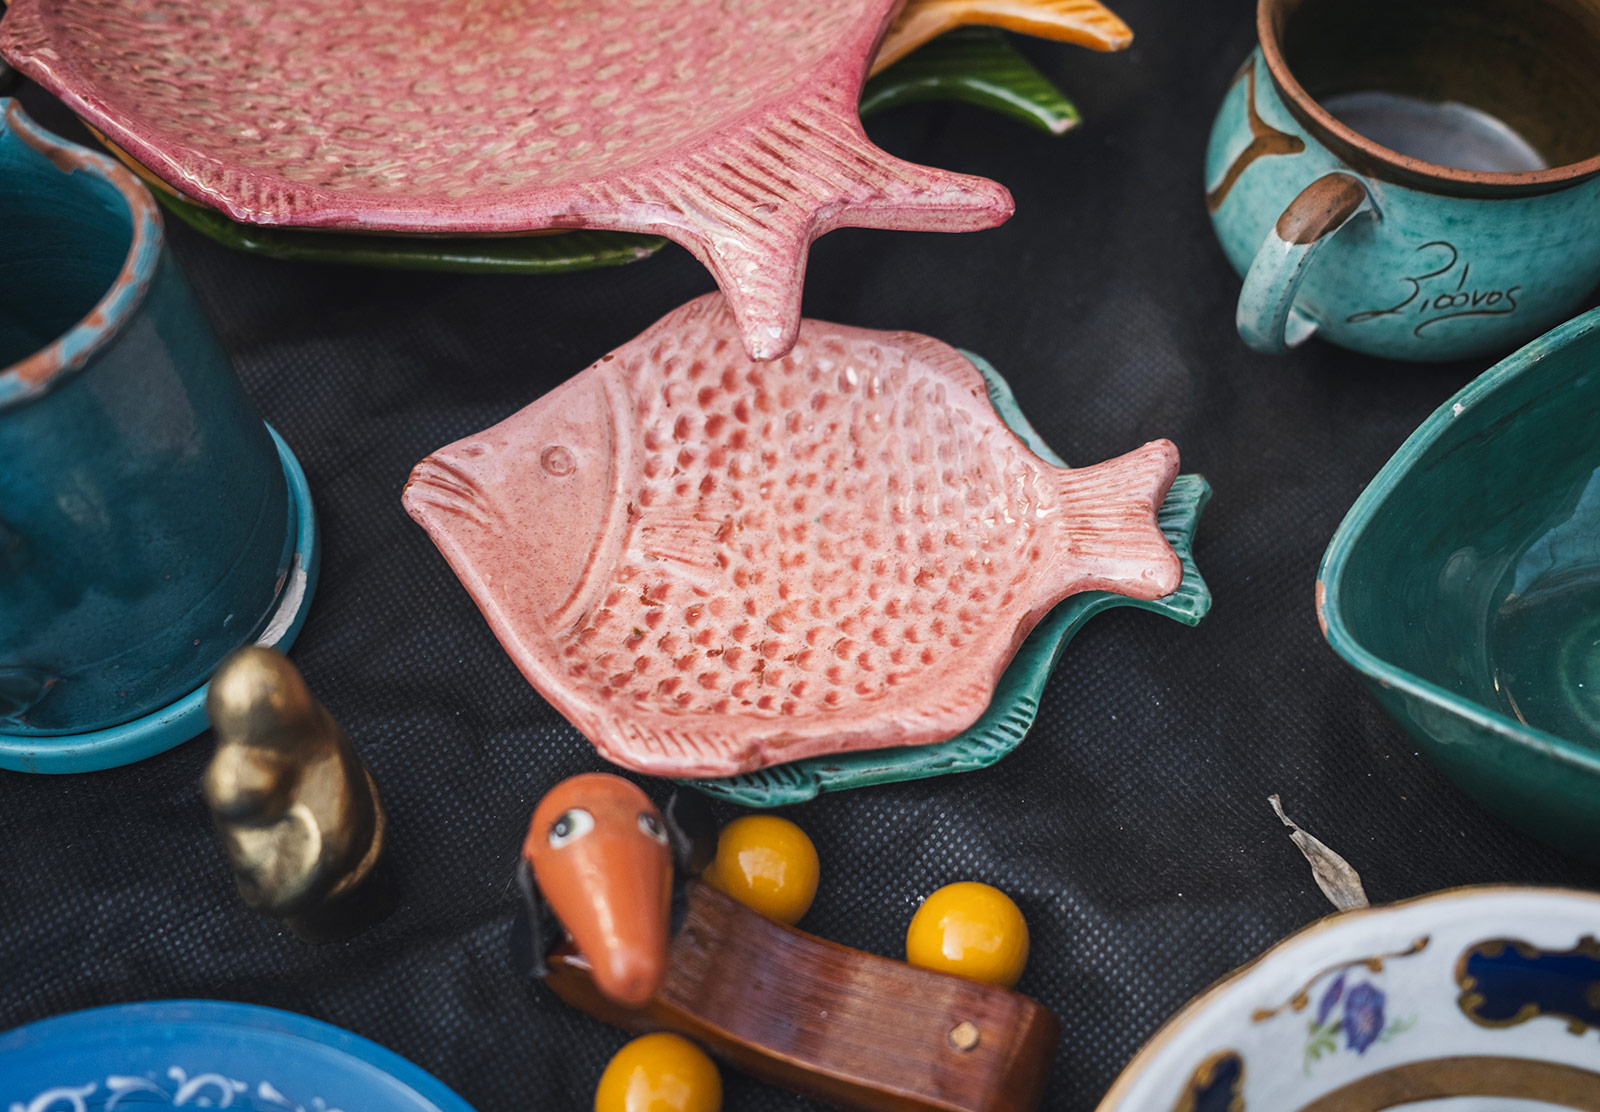 Ceramic fish dish